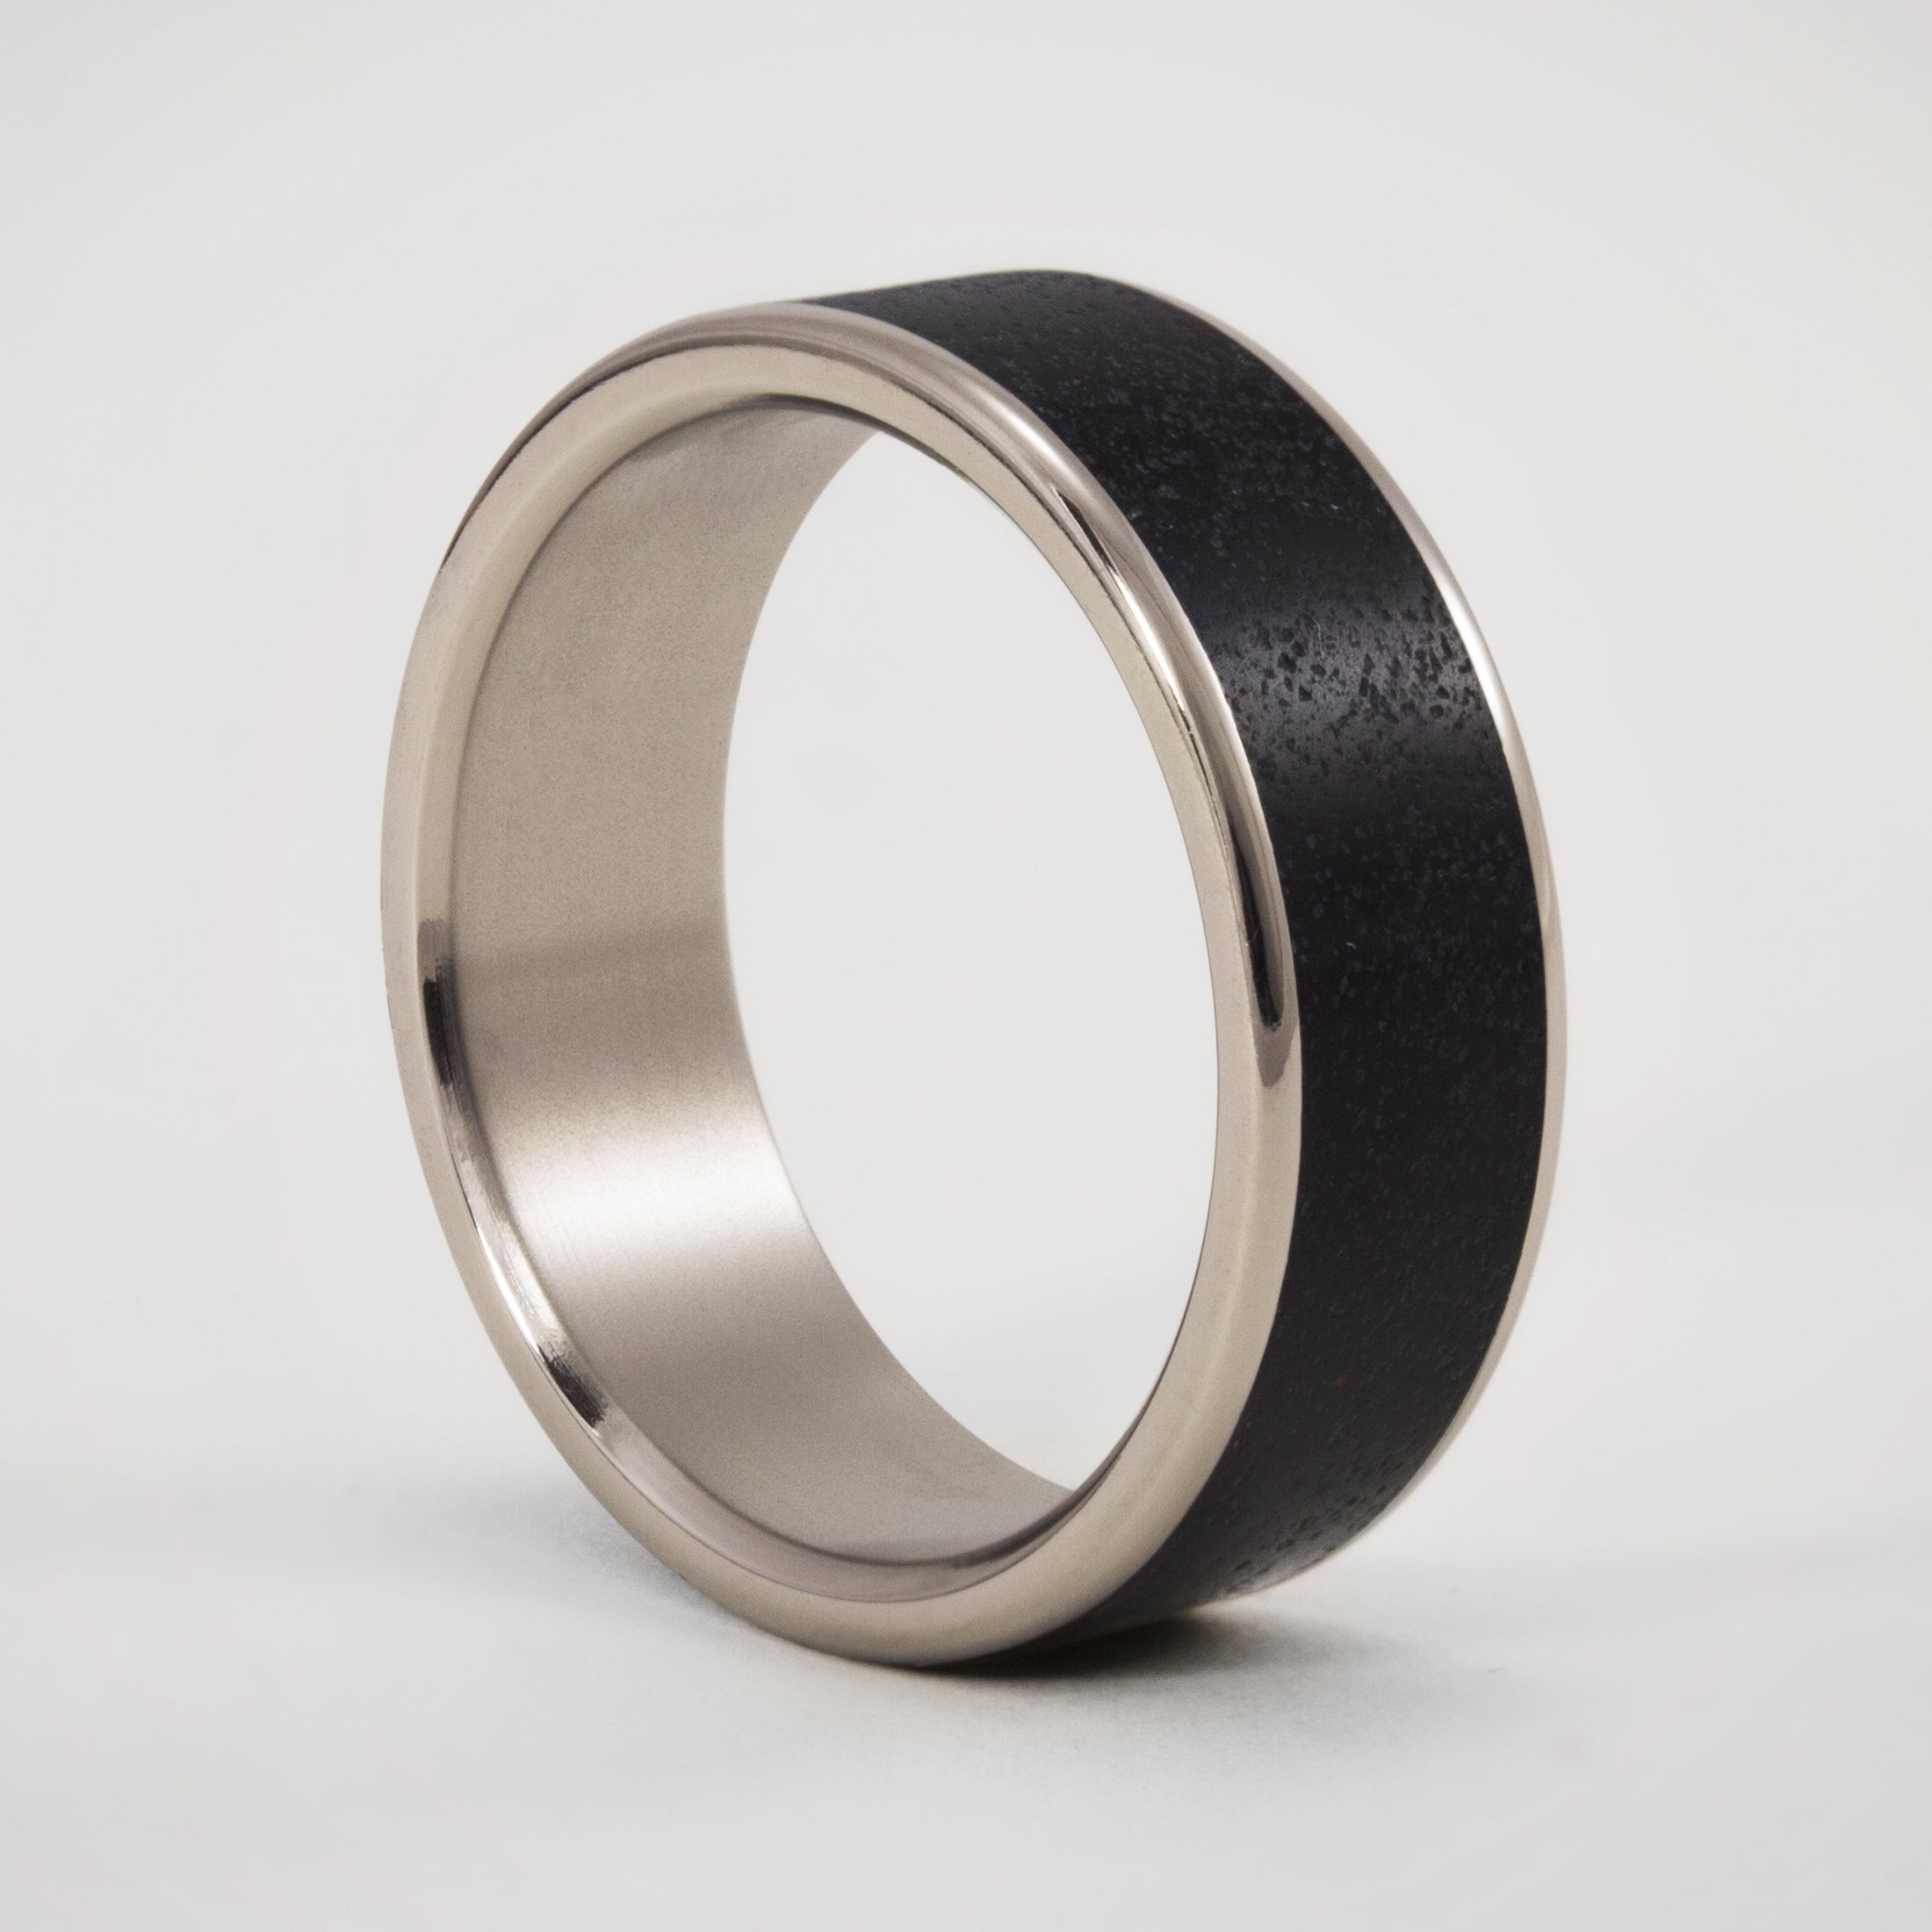 Polished Black concrete and titanium ring